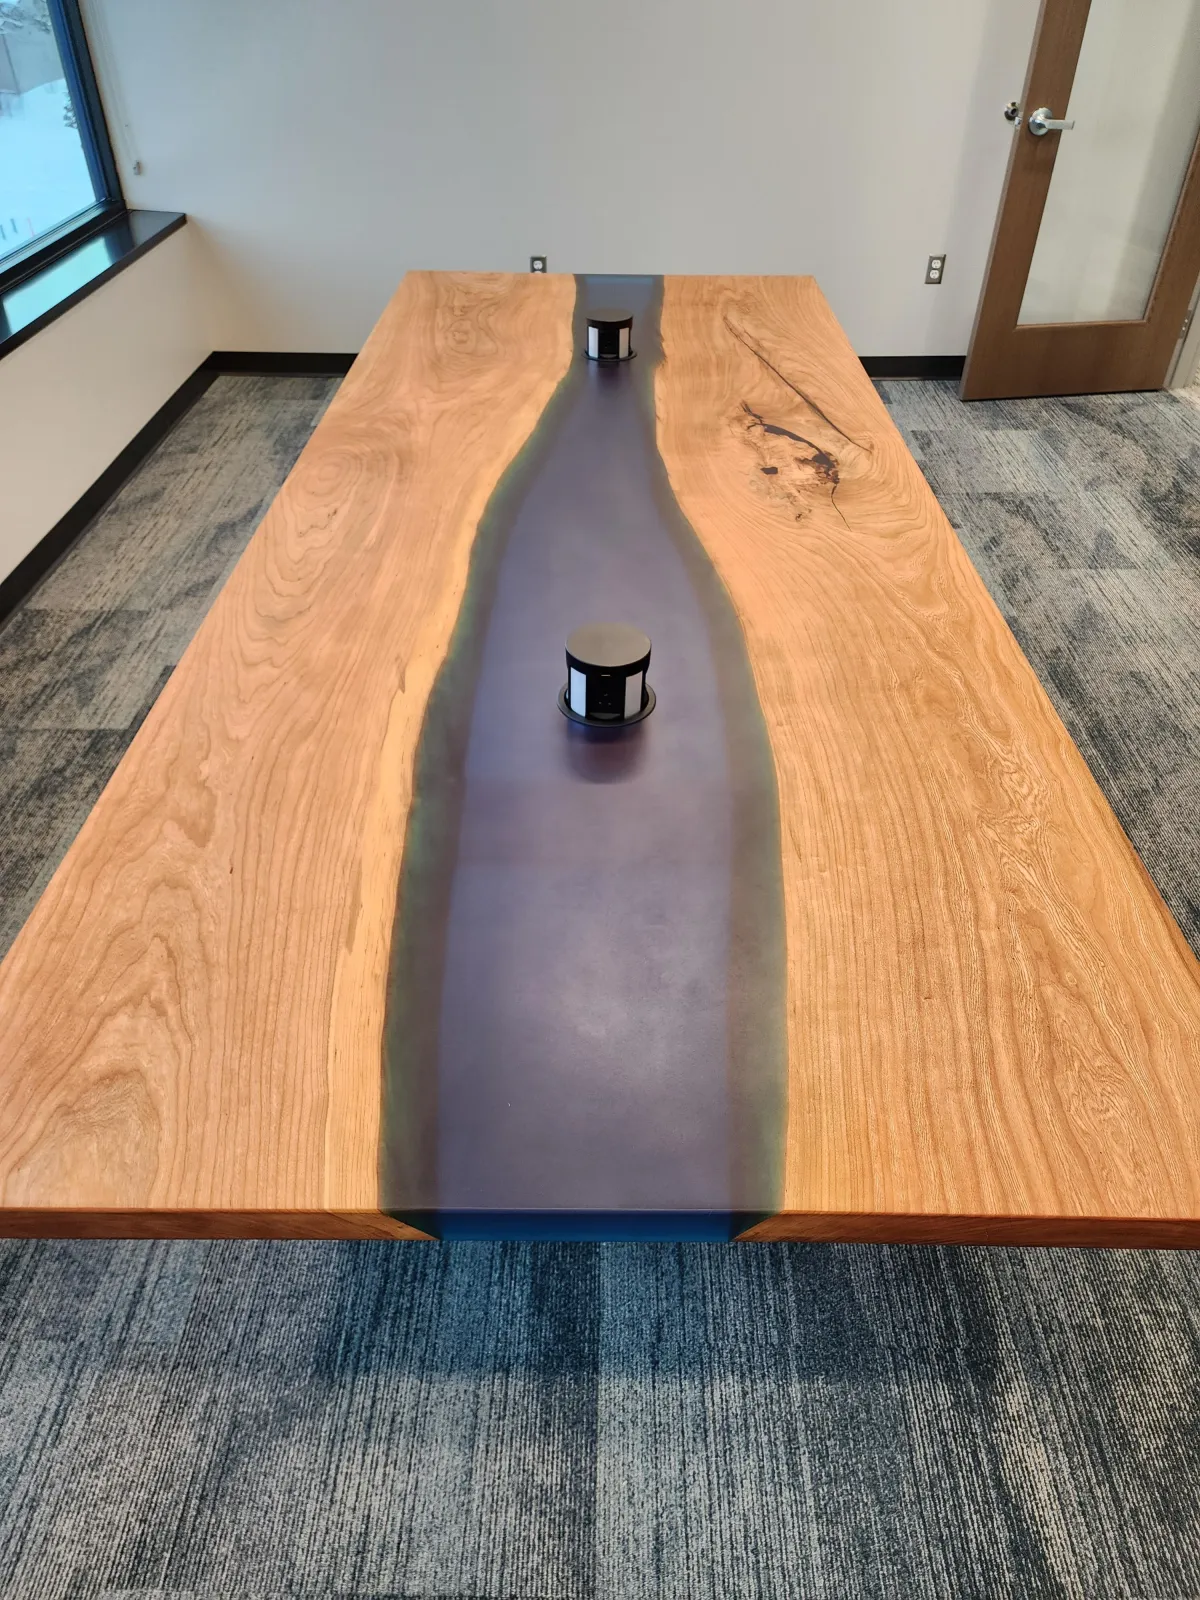 A custom table made by Matt Ruben of Hastings, MN